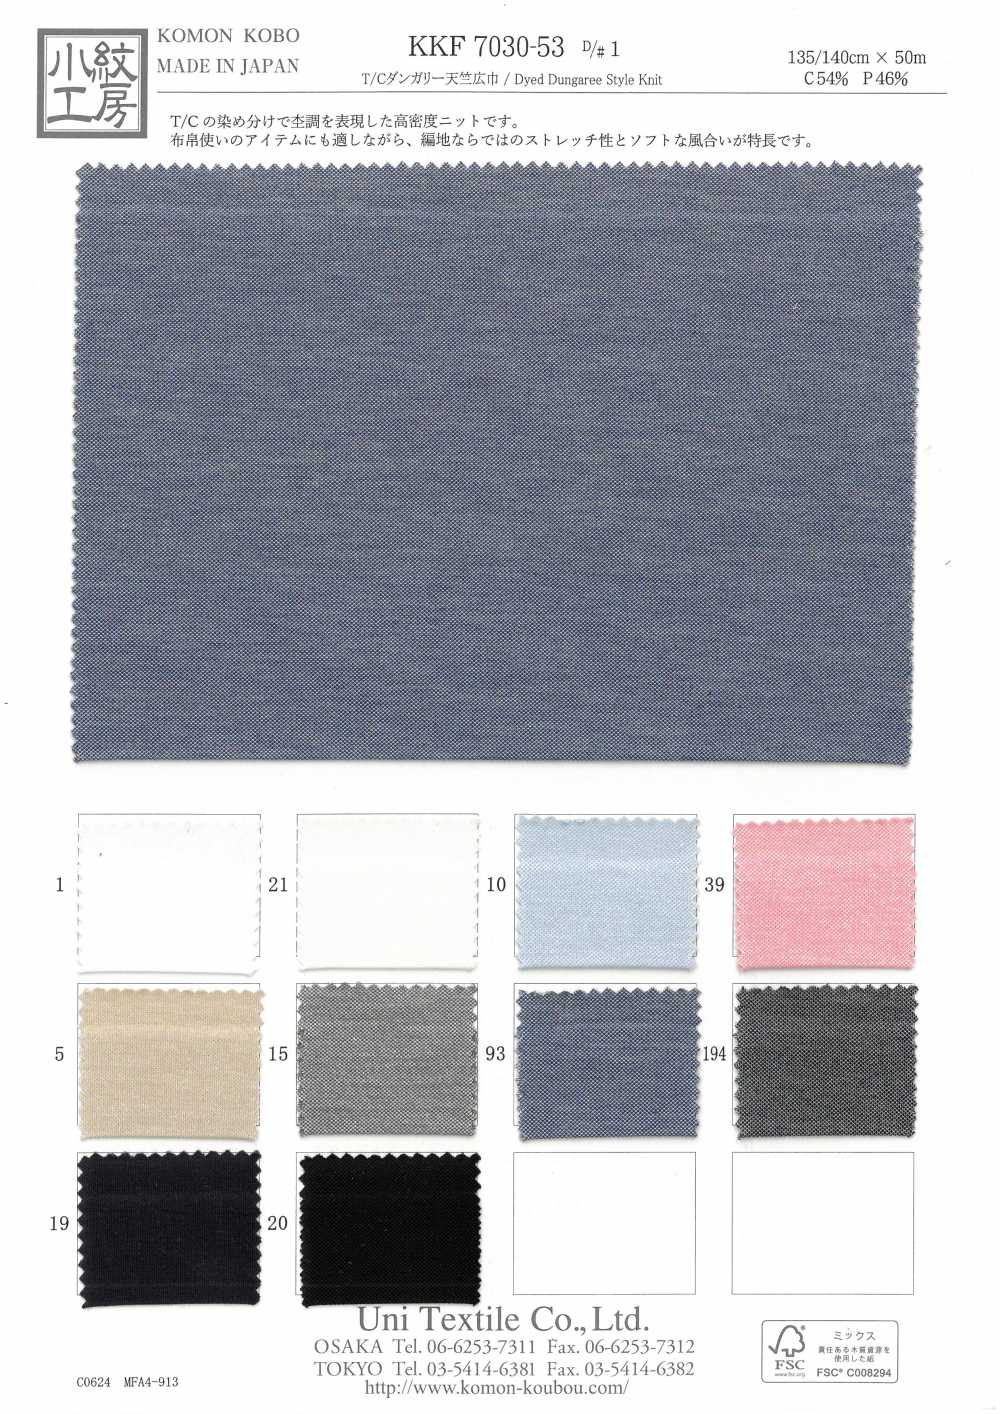 KKF7030-53 T/C Salopette Jersey Ampia Larghezza[Tessile / Tessuto] Uni Textile